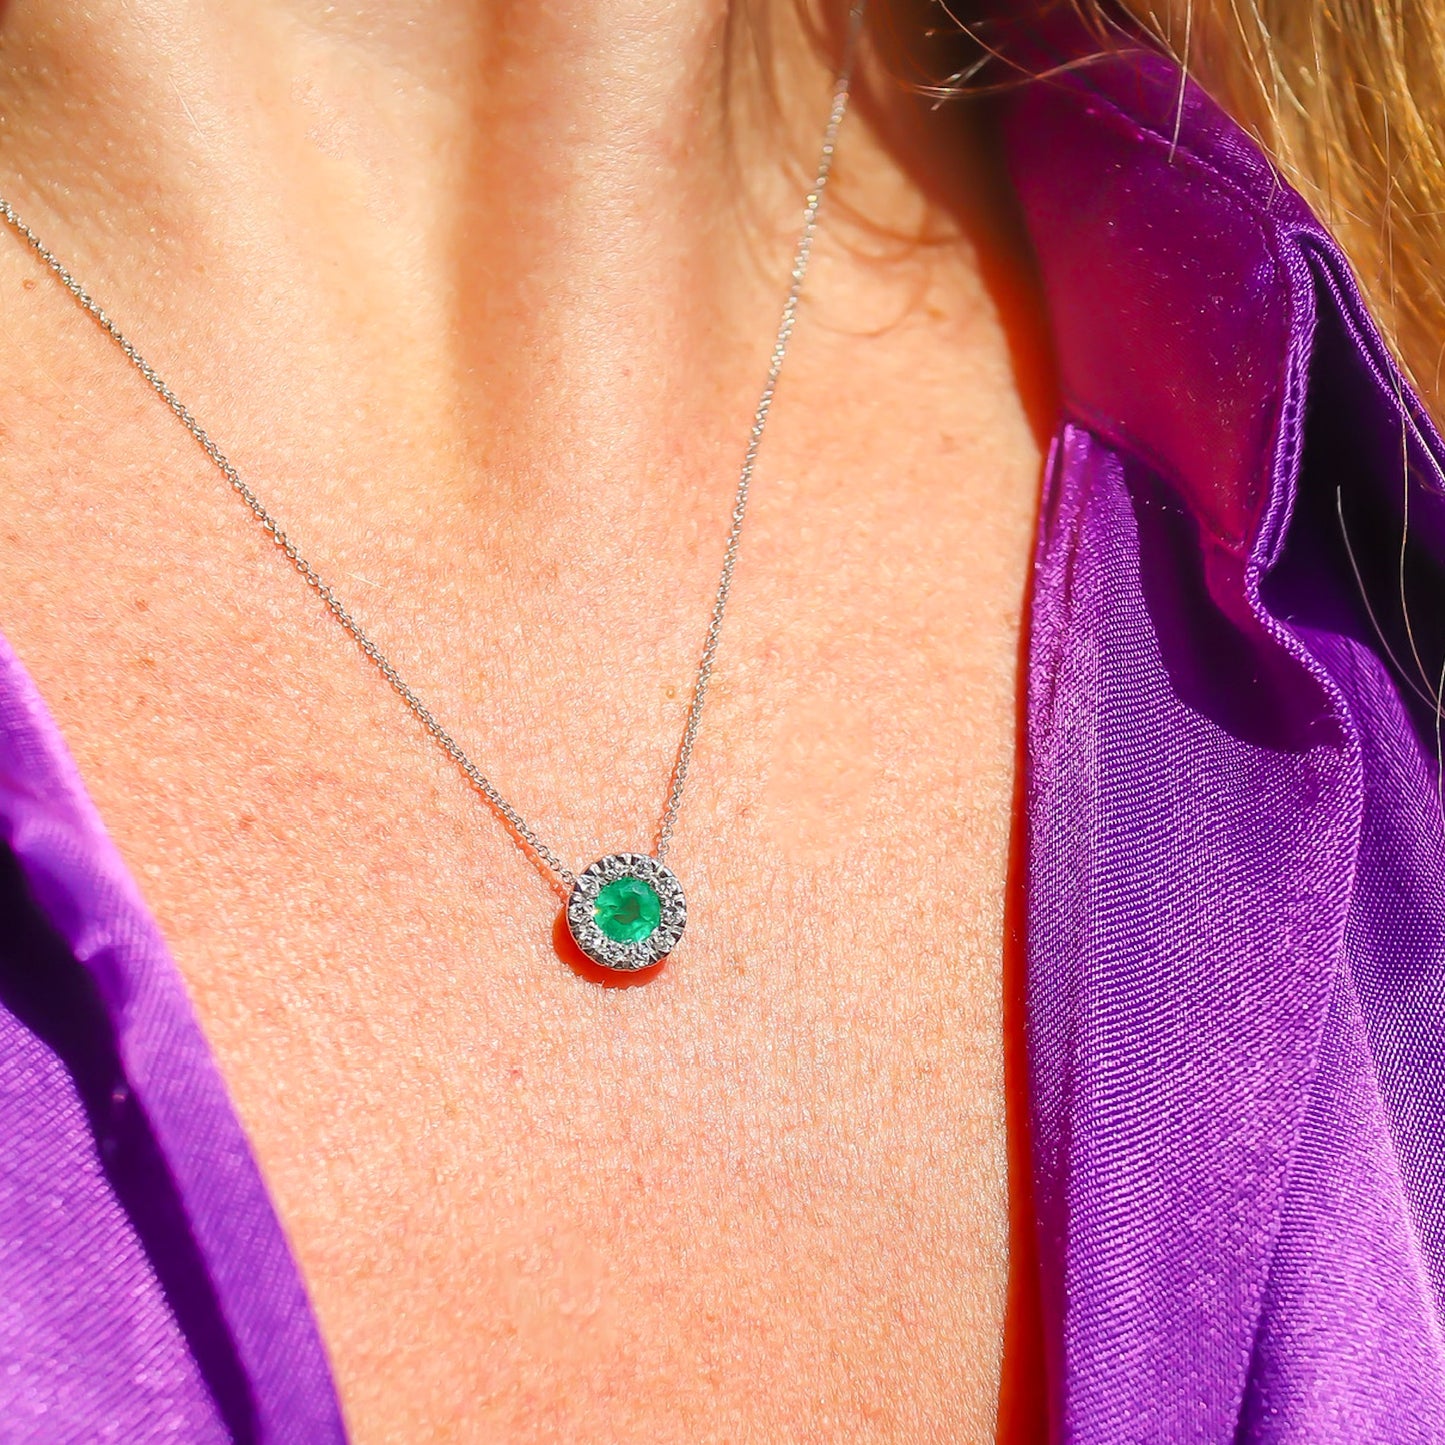 Emerald and Diamond Stud Necklace